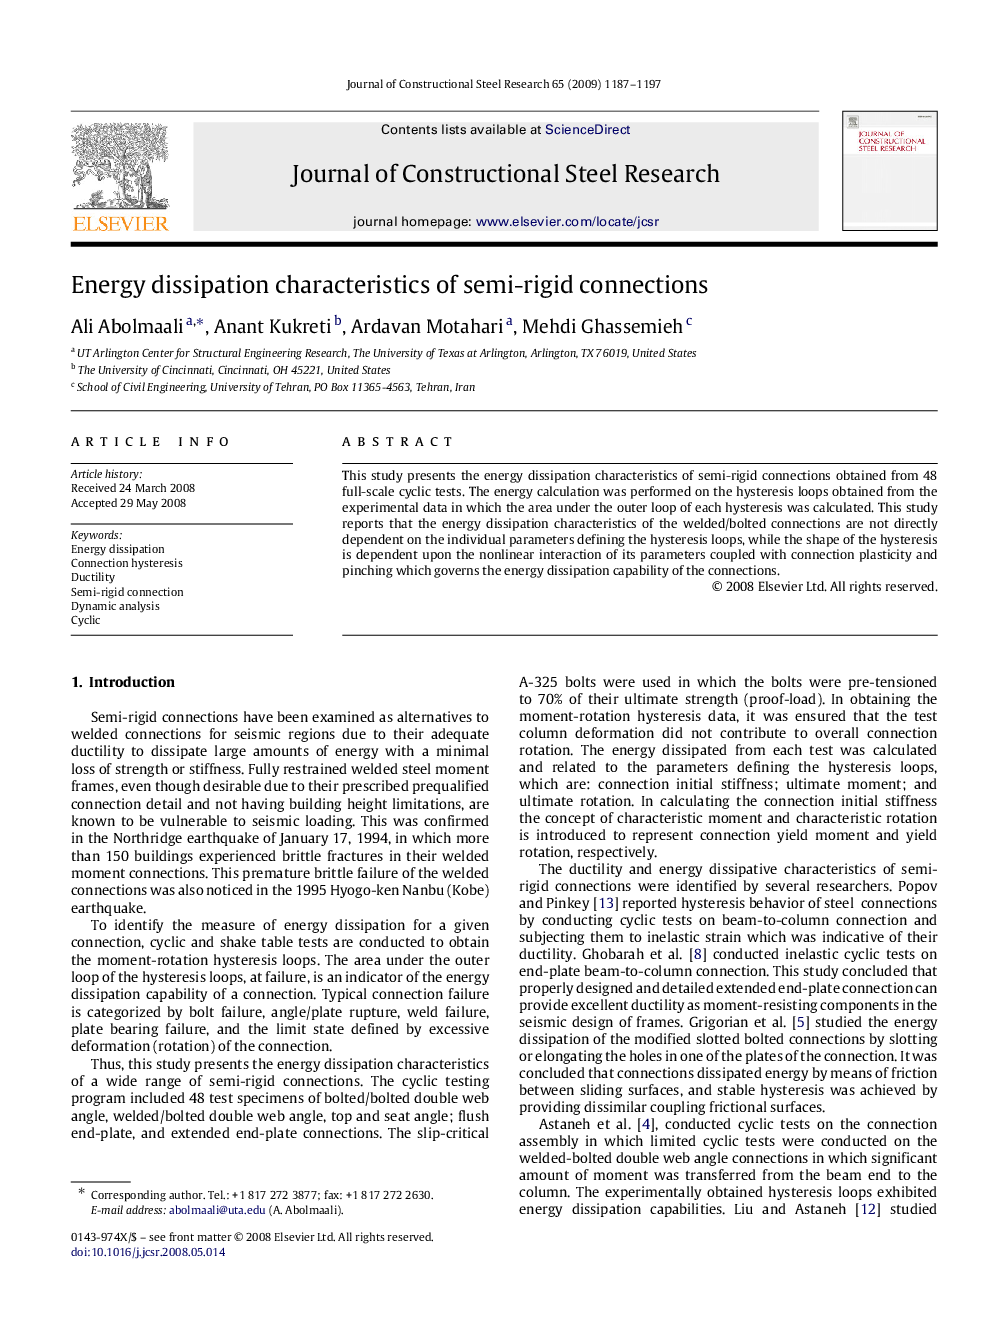 Energy dissipation characteristics of semi-rigid connections